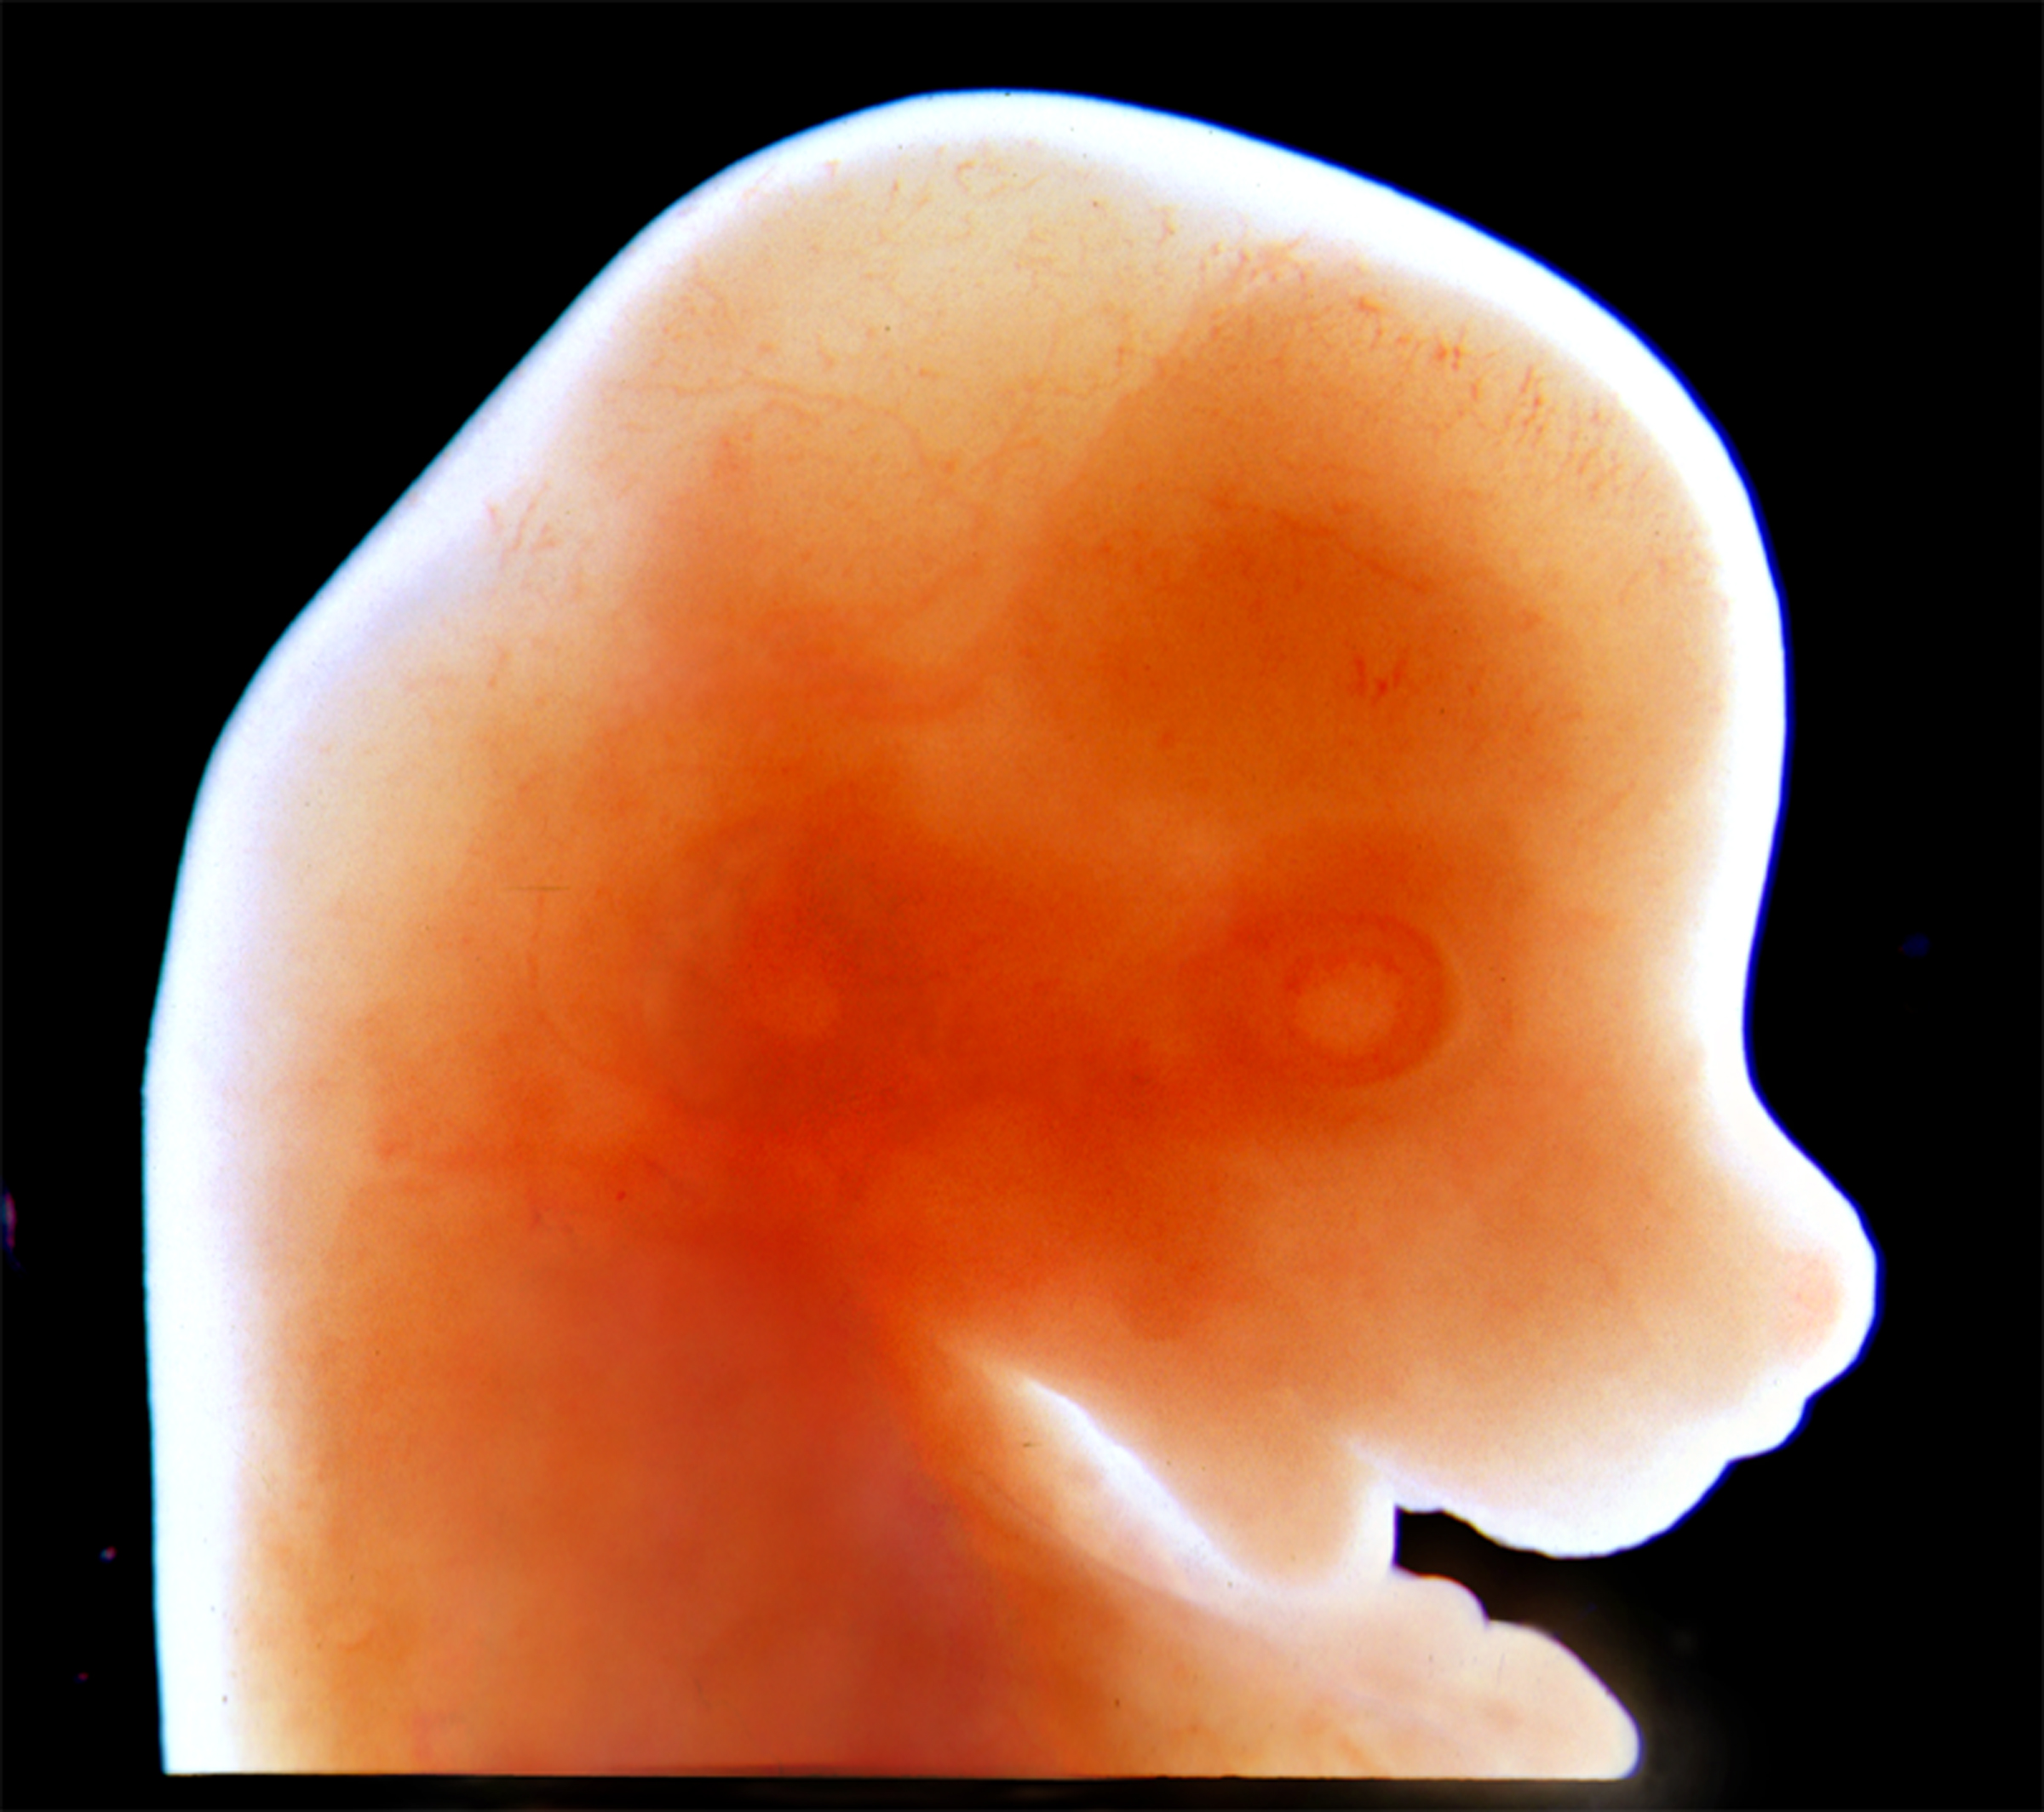 Mouse embryo craniofacial region in profile.